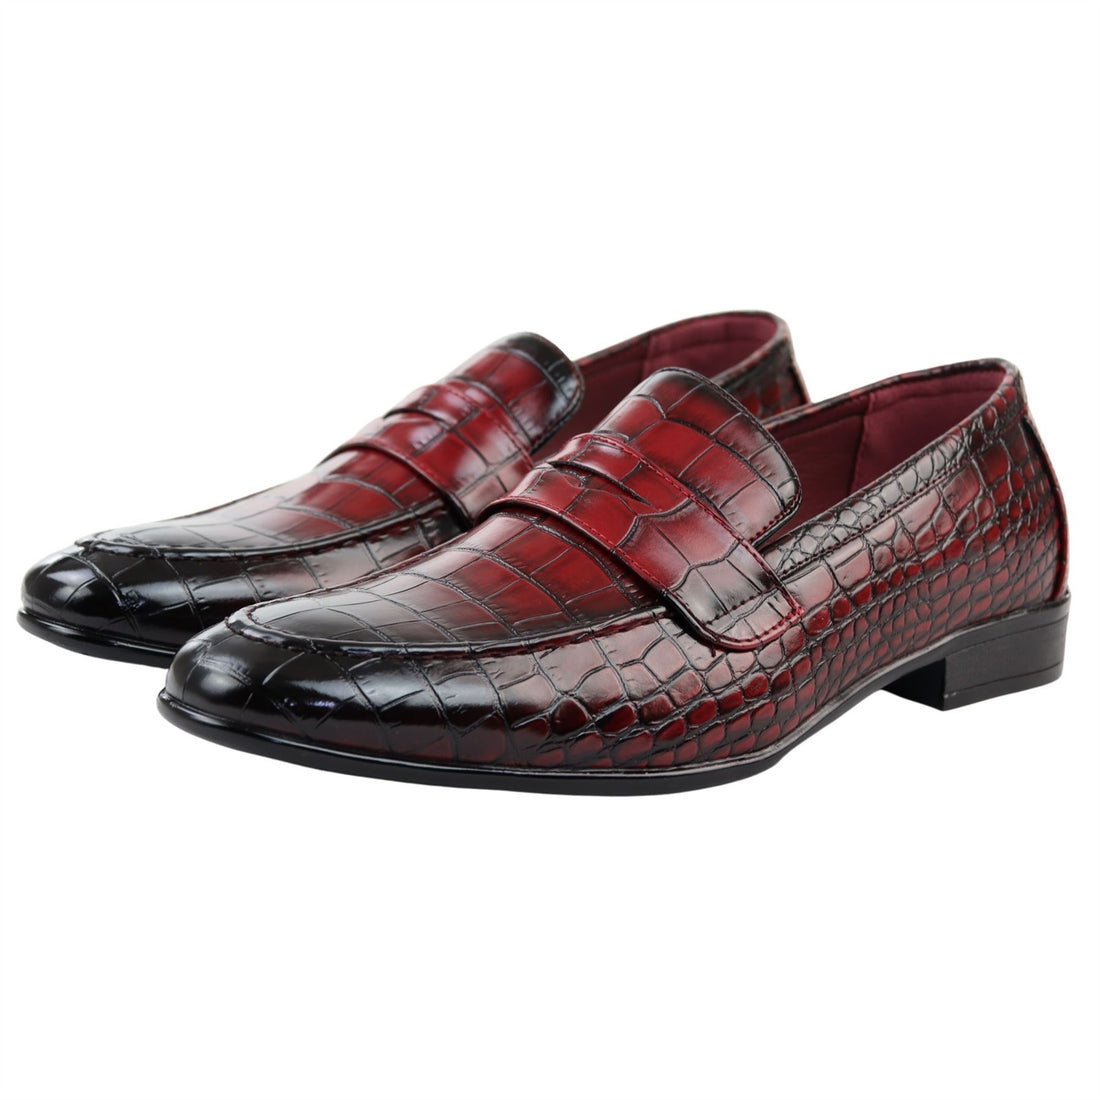 Men's Moccasin Loafers Leather Lined Slip On Formal Dress Shoes